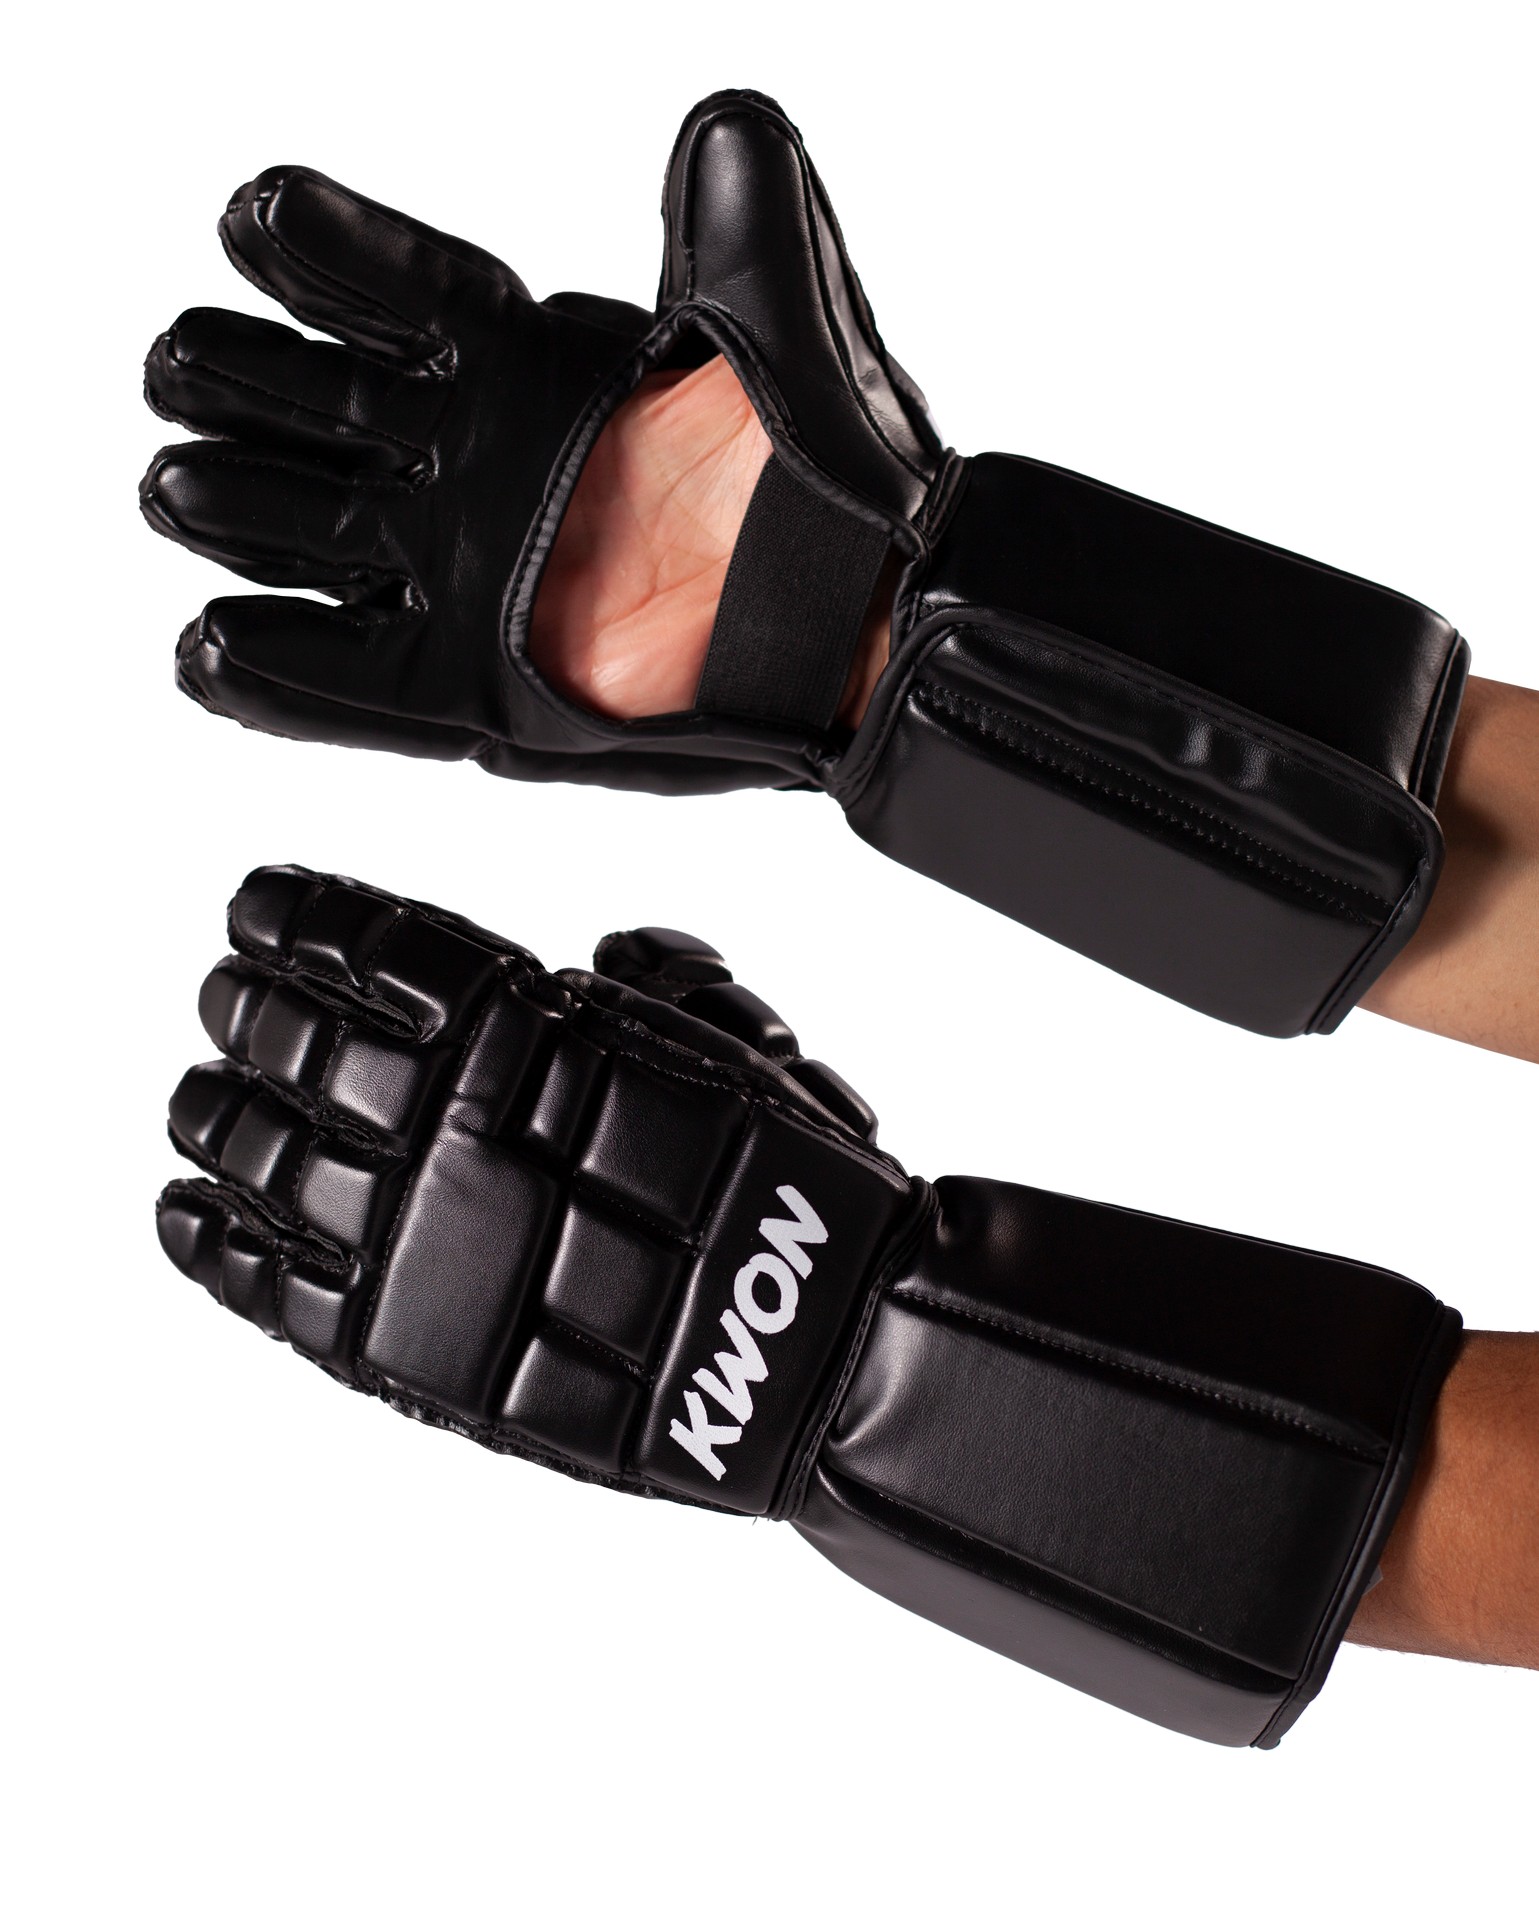 KWON Escrima Gloves | Forearm Protection